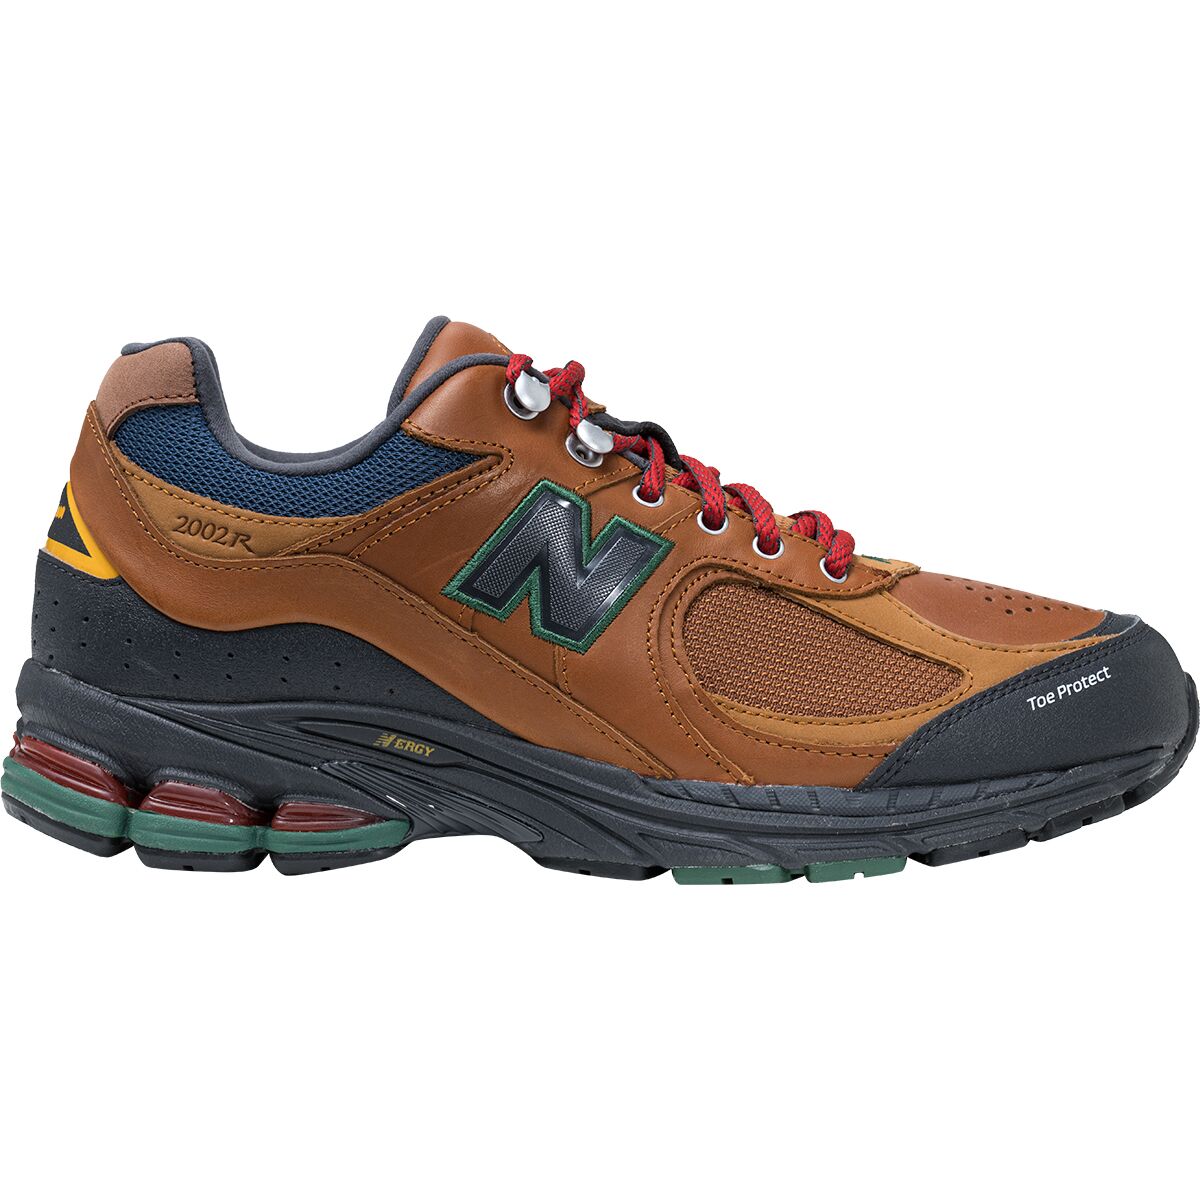 New Balance 2002R Shoe - Footwear